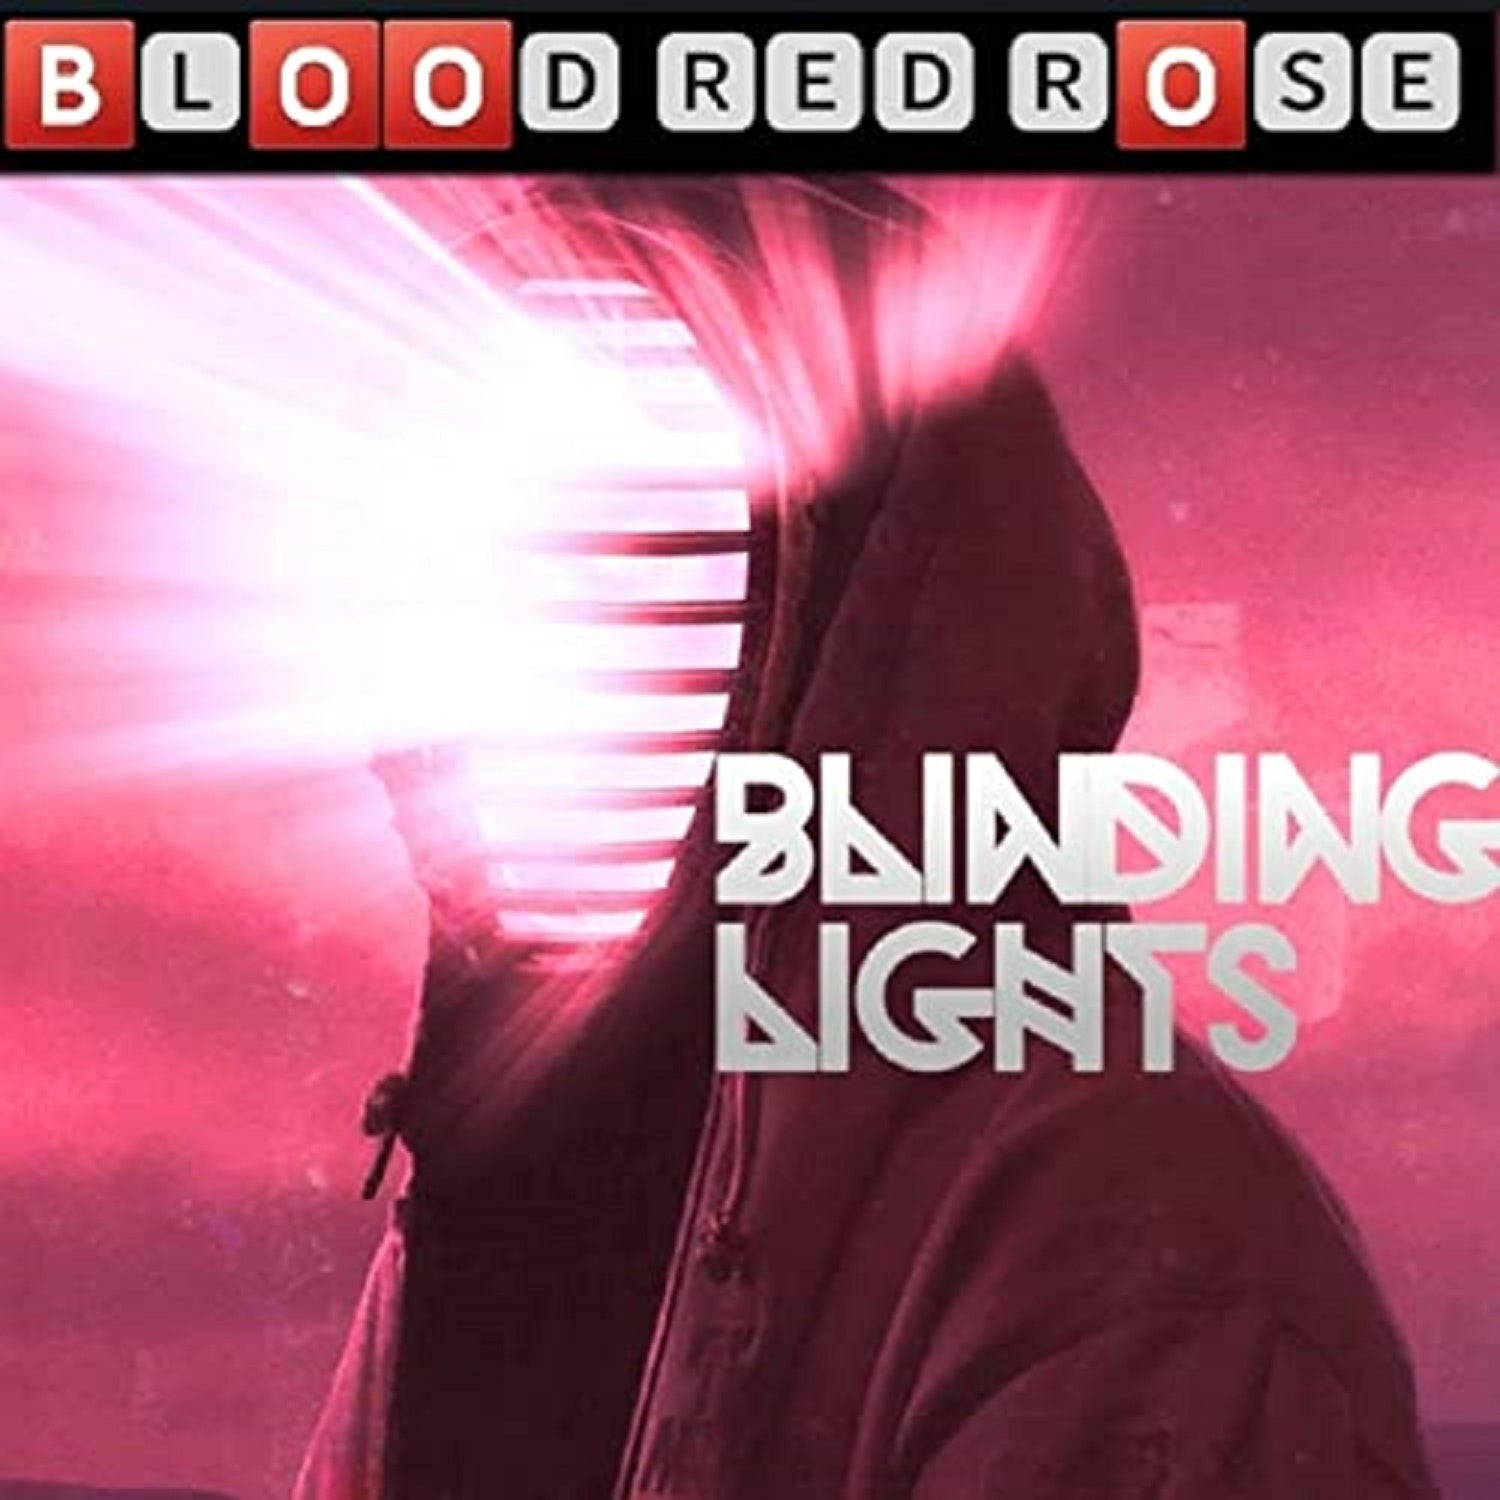 Blood Red Rose – ‘Blinding Lights’